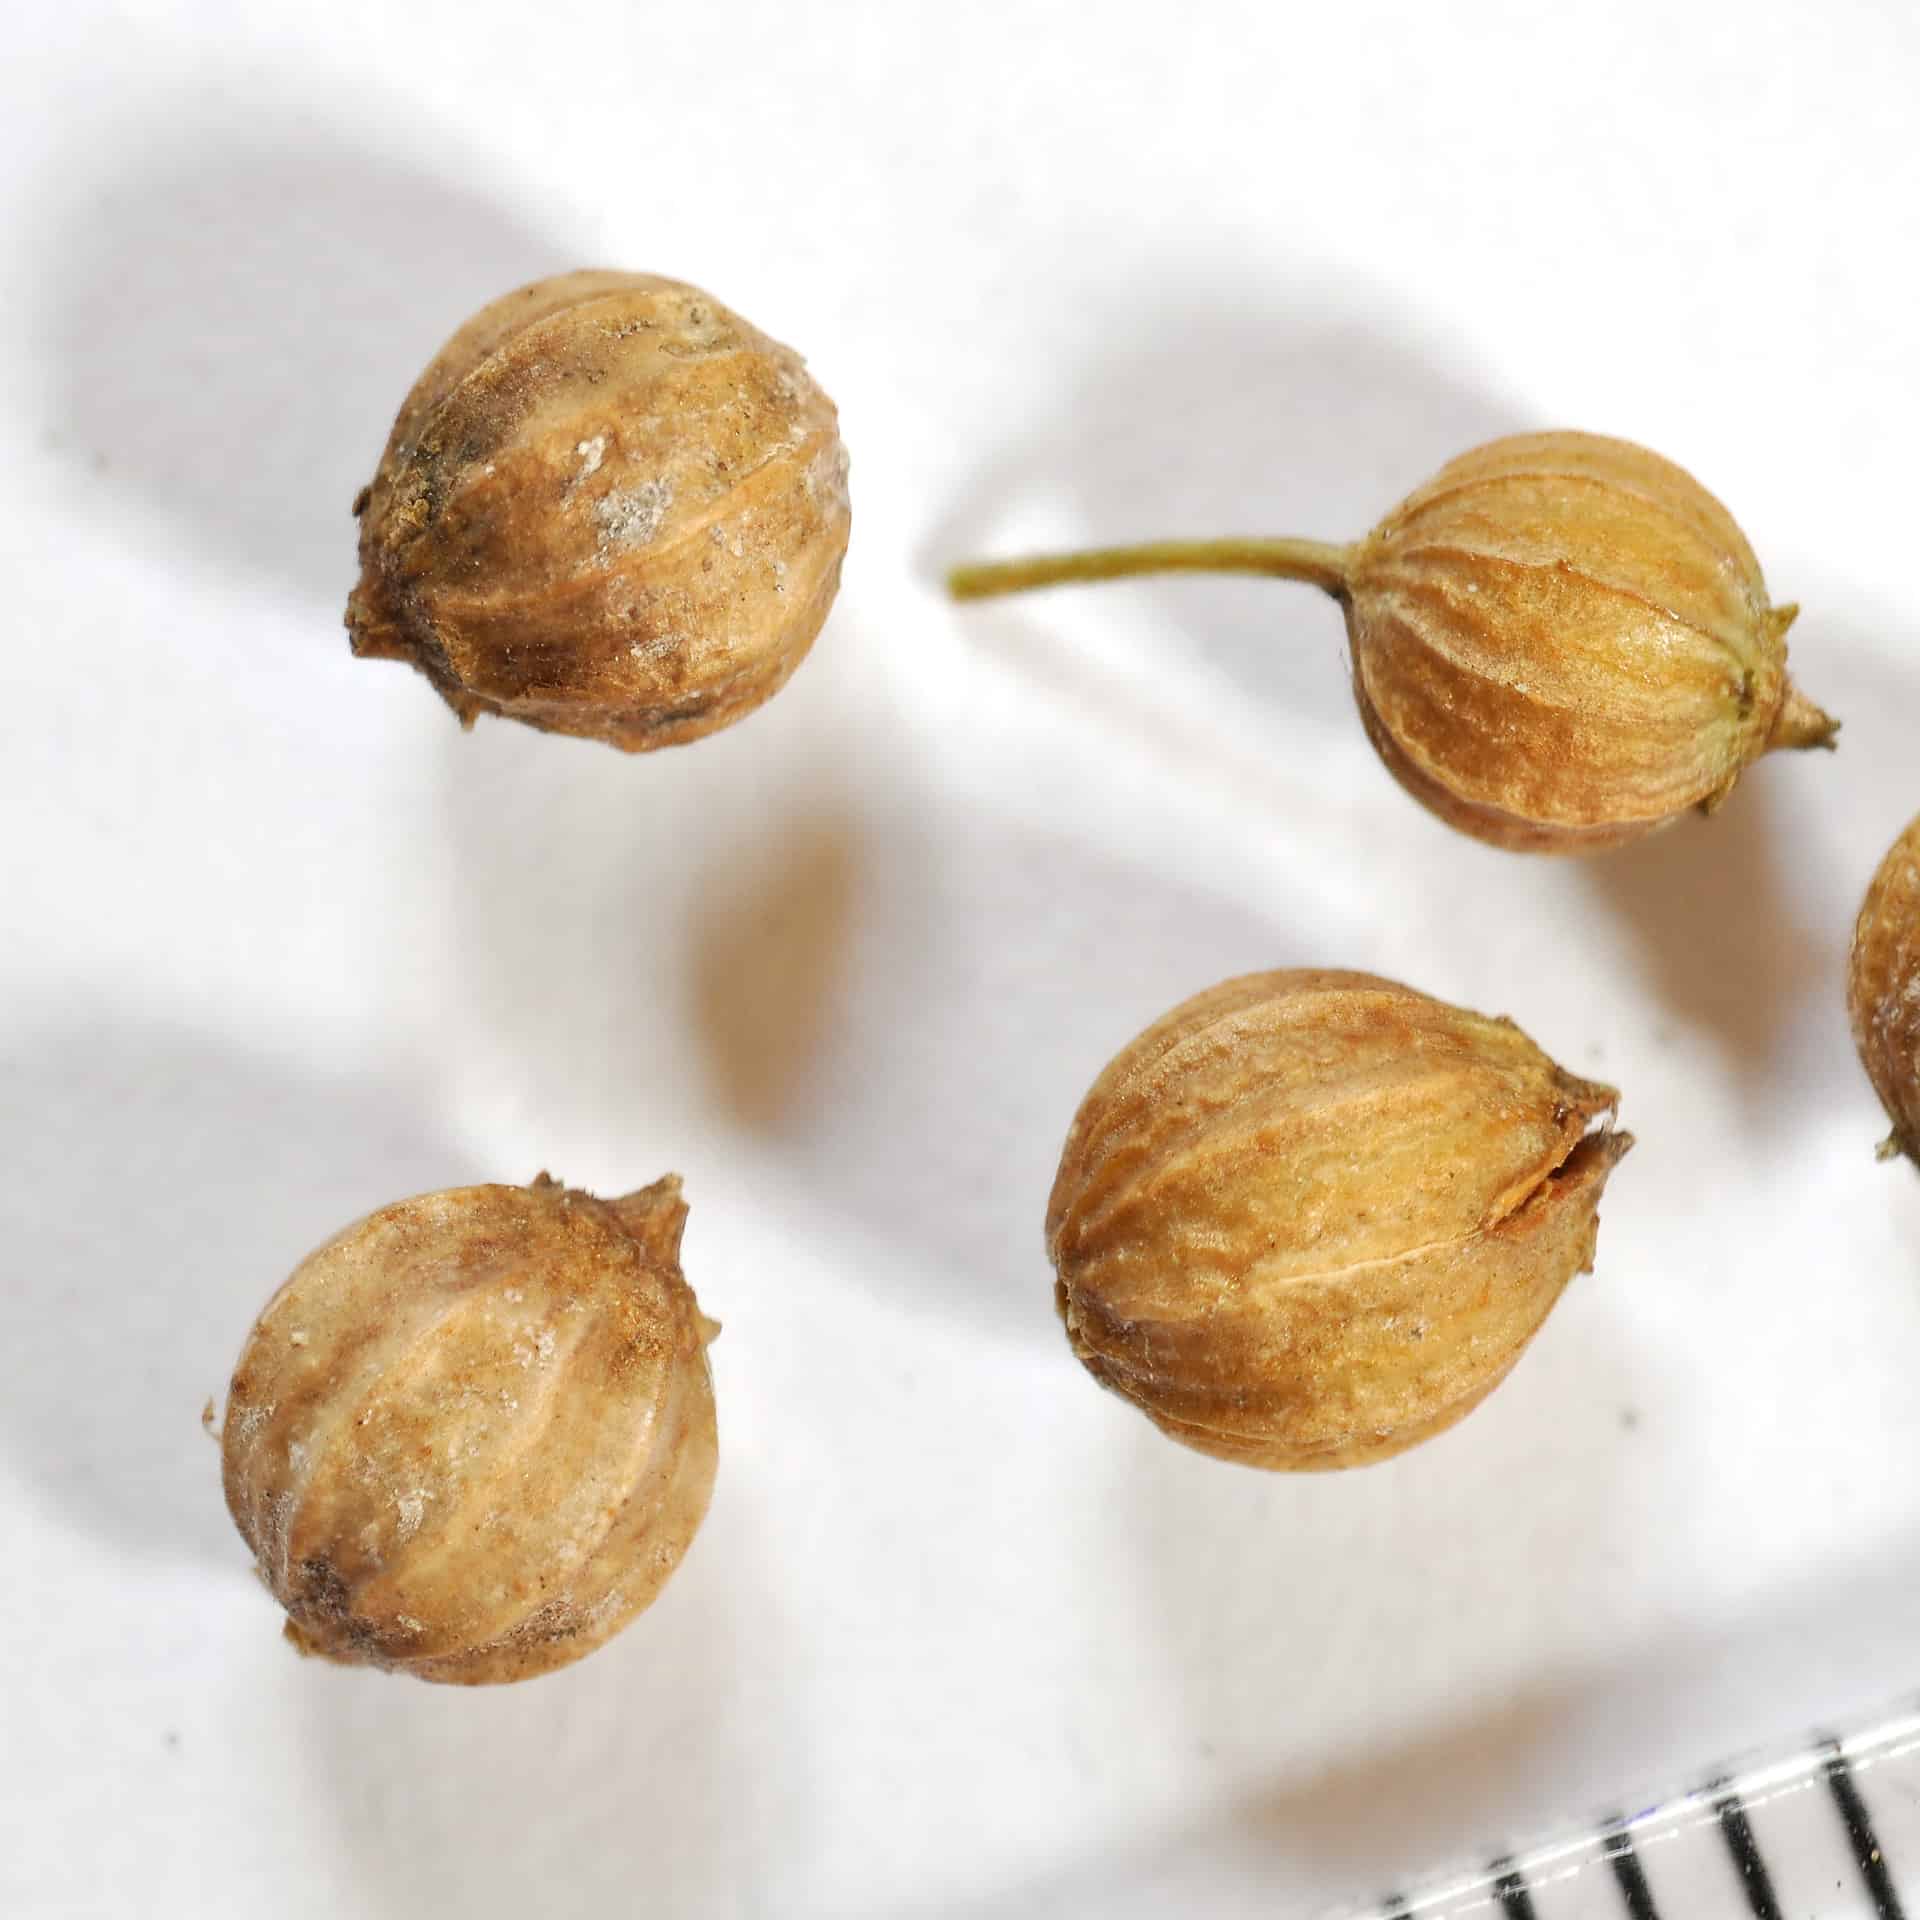 cilantro coriander seeds for propagation